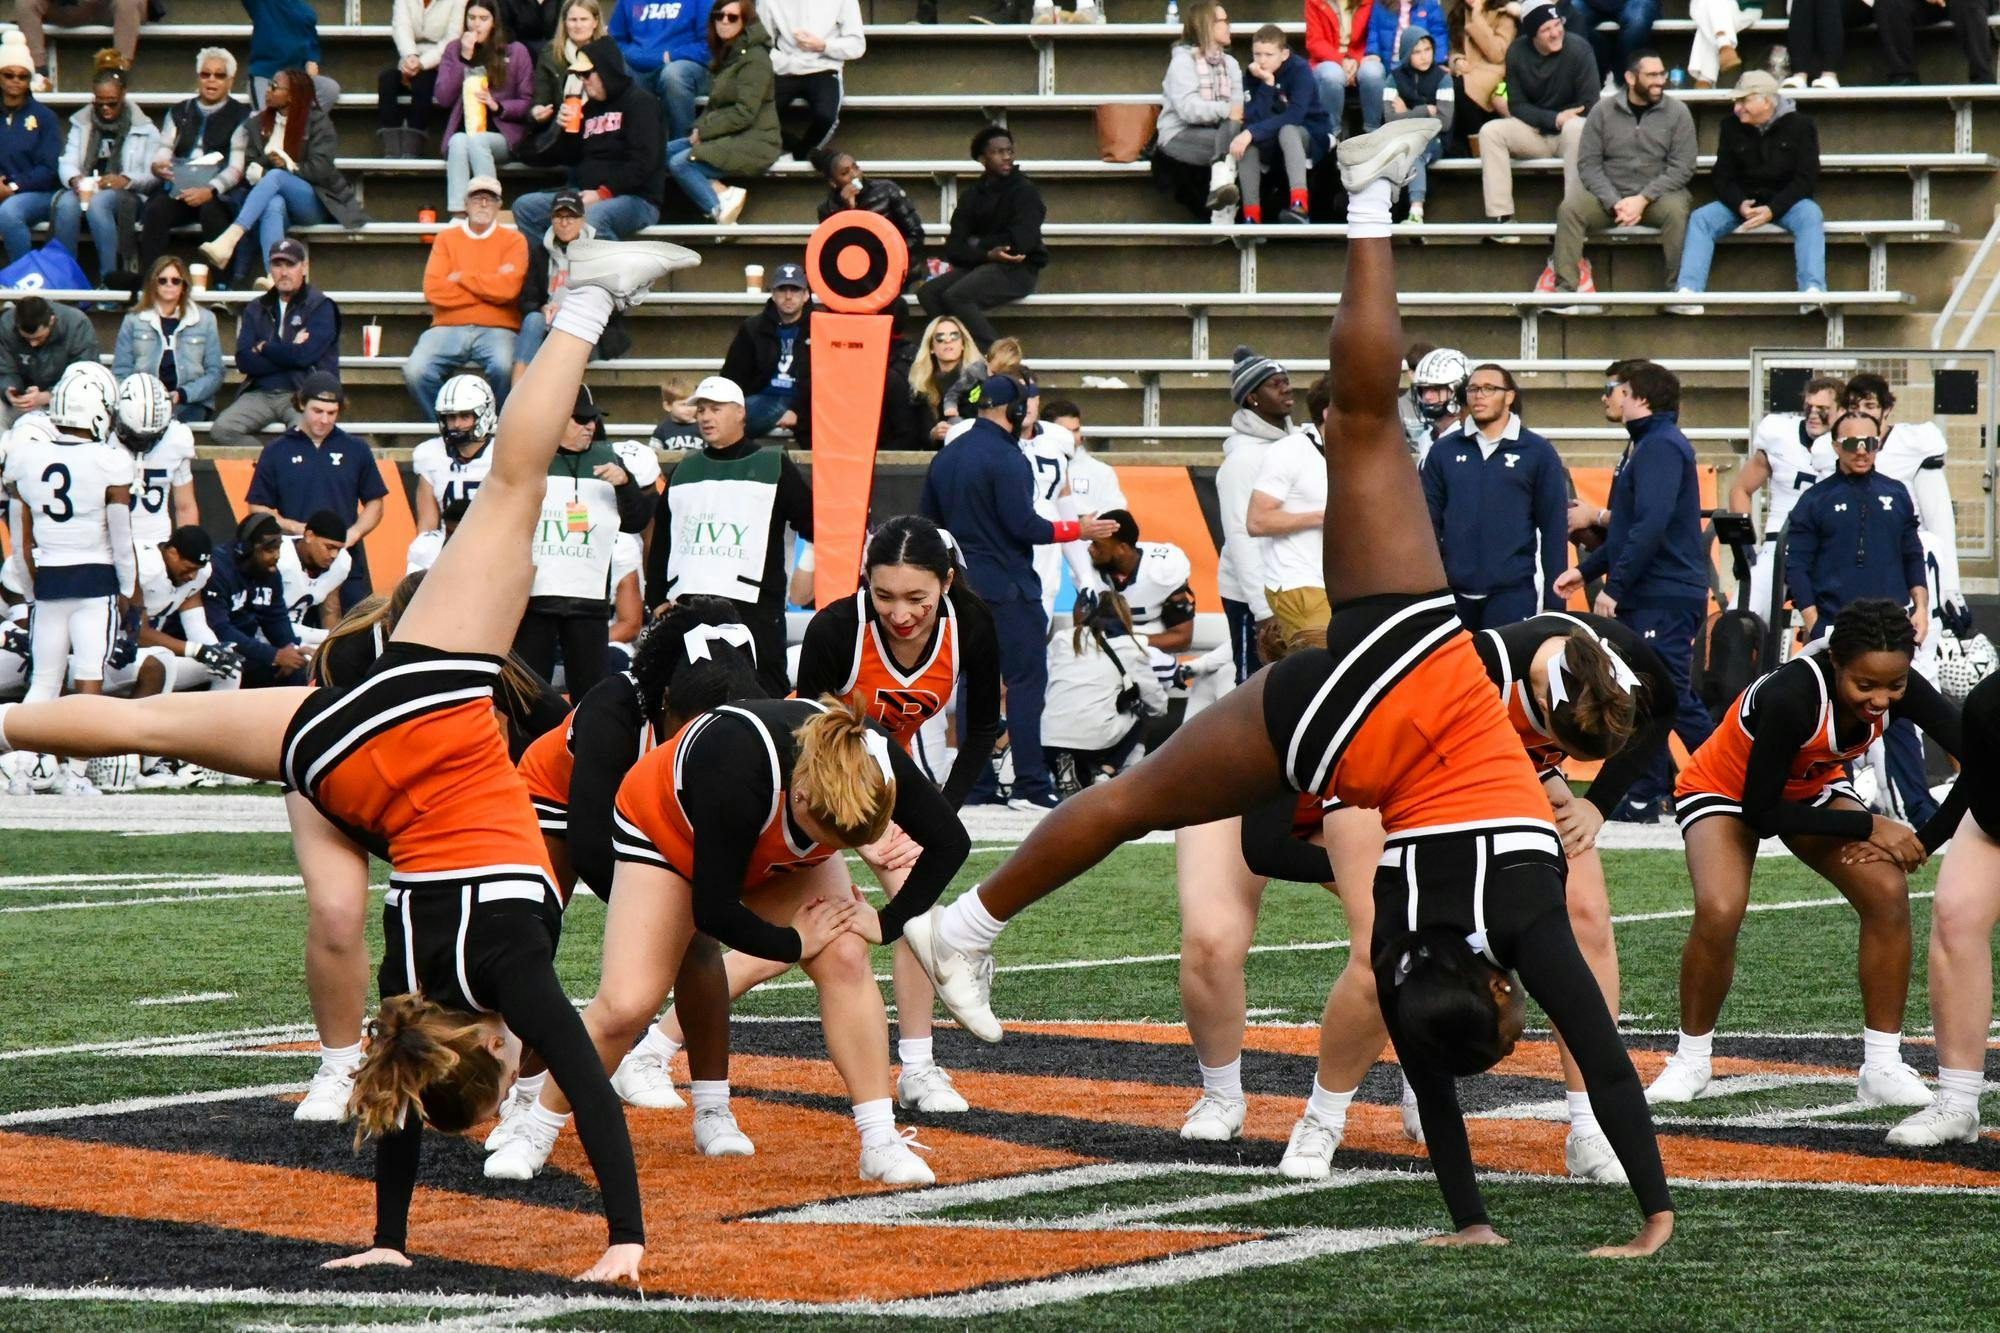 2 Princeton cheerleaders do cartwheels with multiple other cheerleaders dancing in the background.